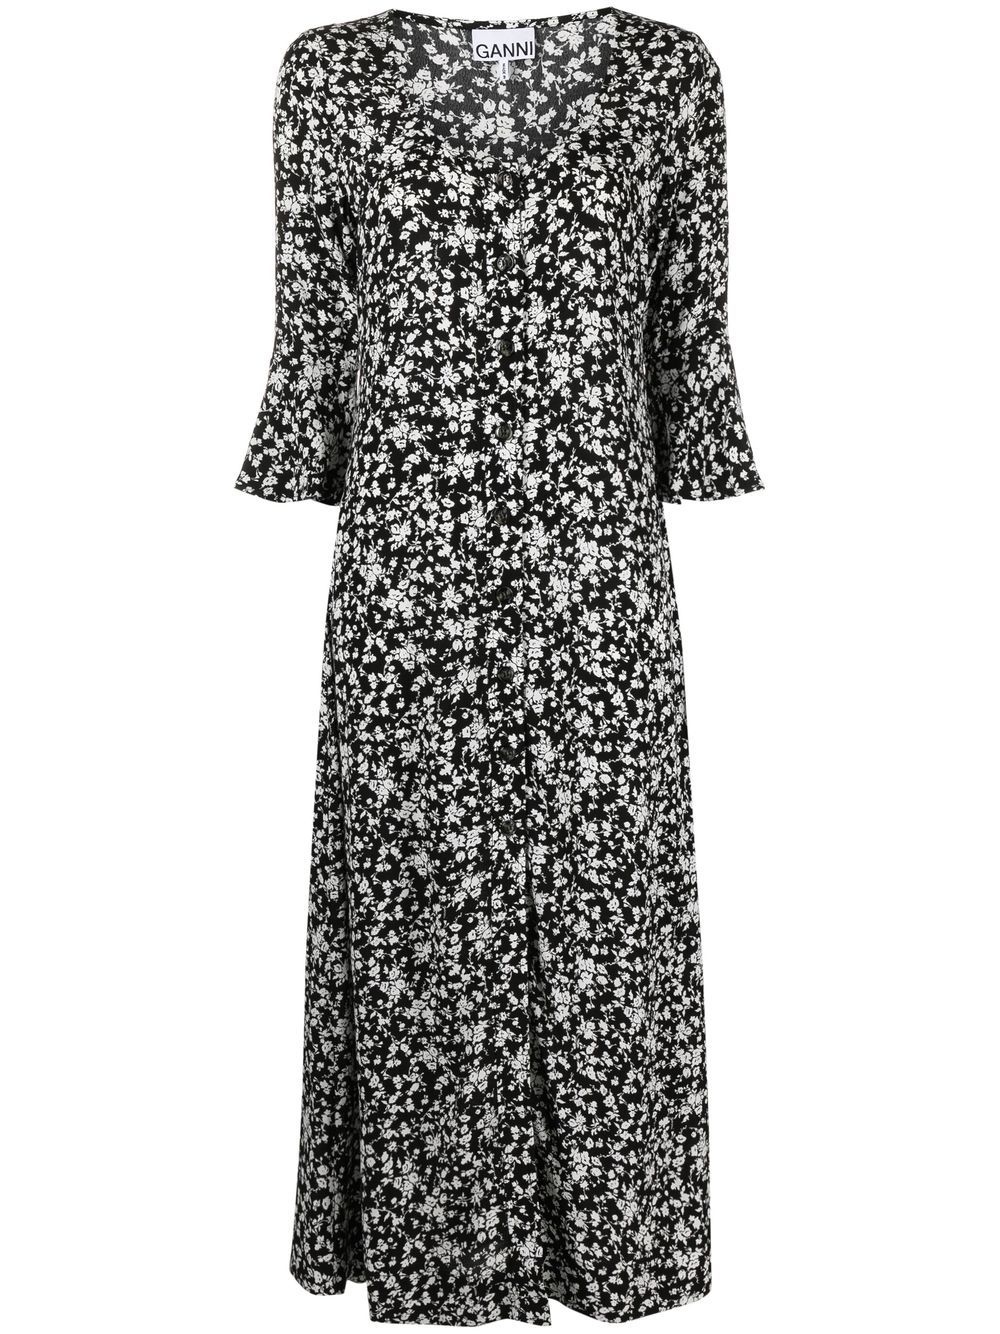 GANNI floral printed button dress - Black